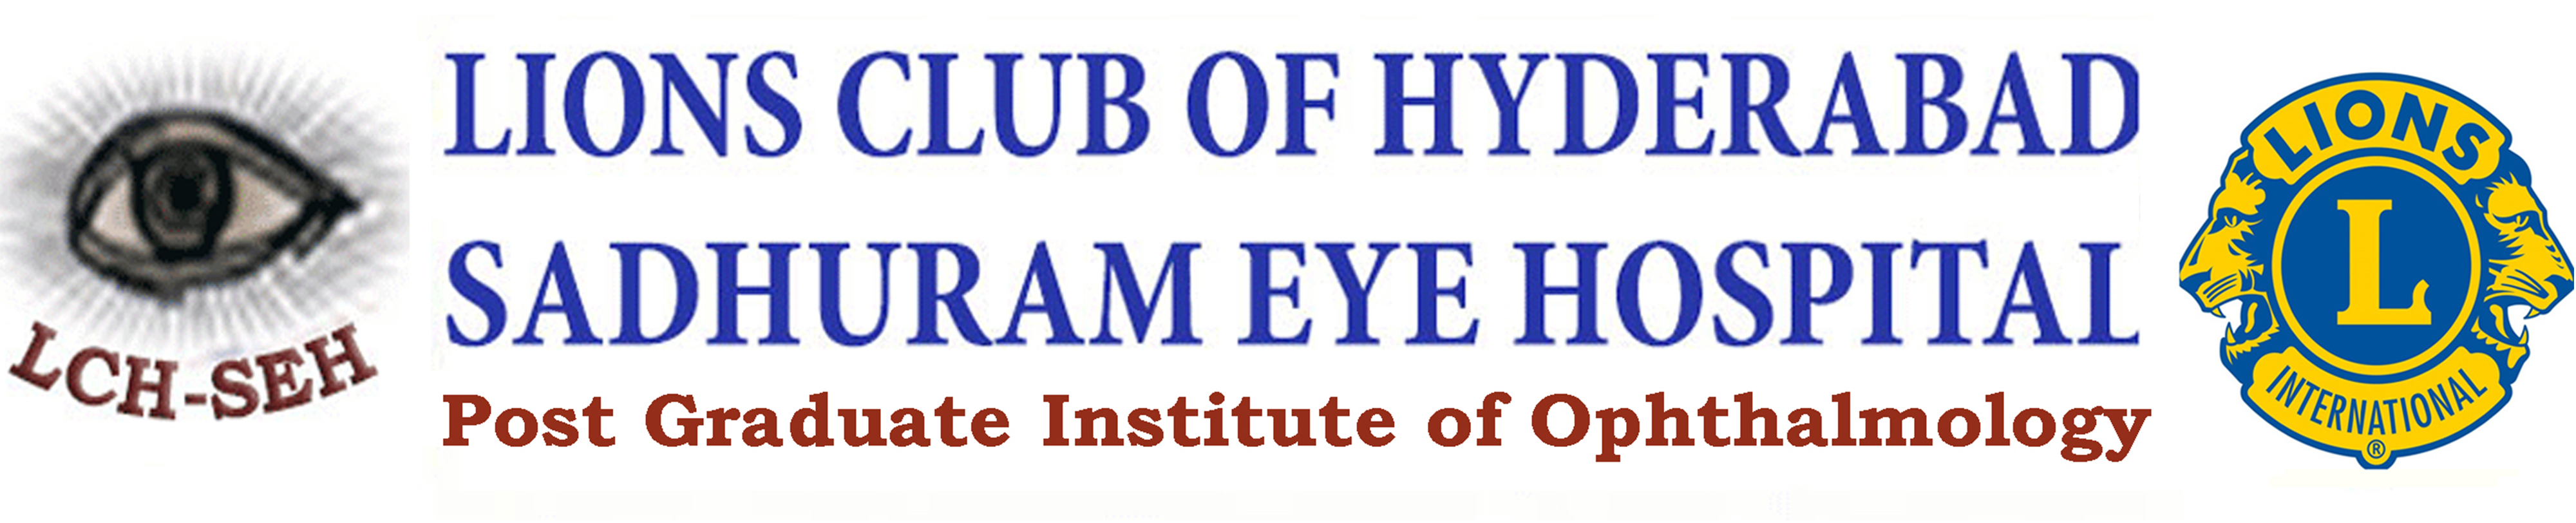 Lions Club of Hyderabad Sadhuram Eye Hospital|Diagnostic centre|Medical Services